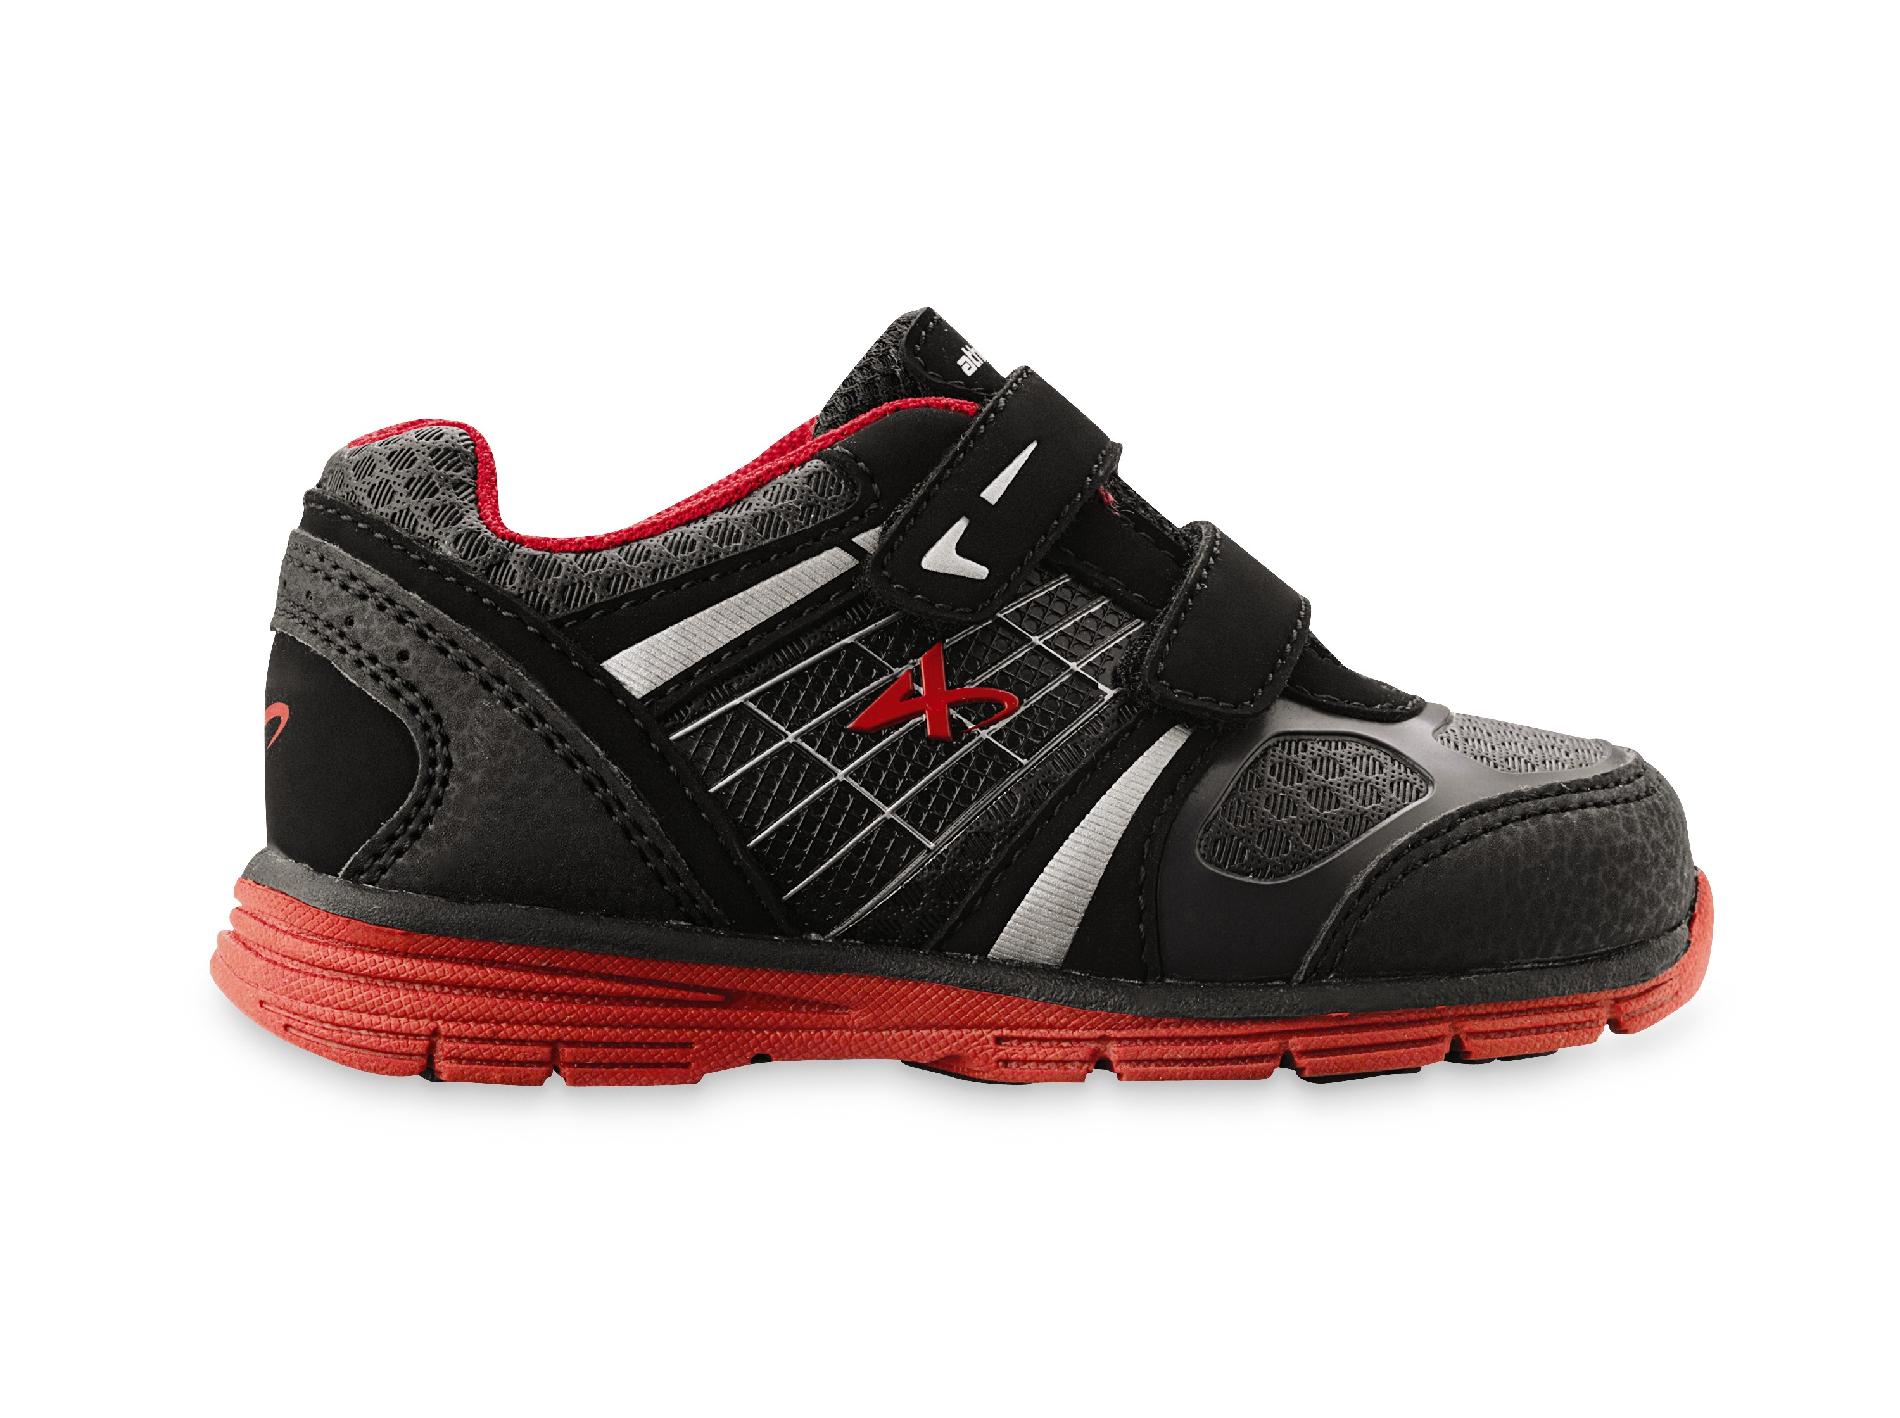 Athletech Toddler Boy's Ath L-Hawk Athletic Shoe - Black/Red